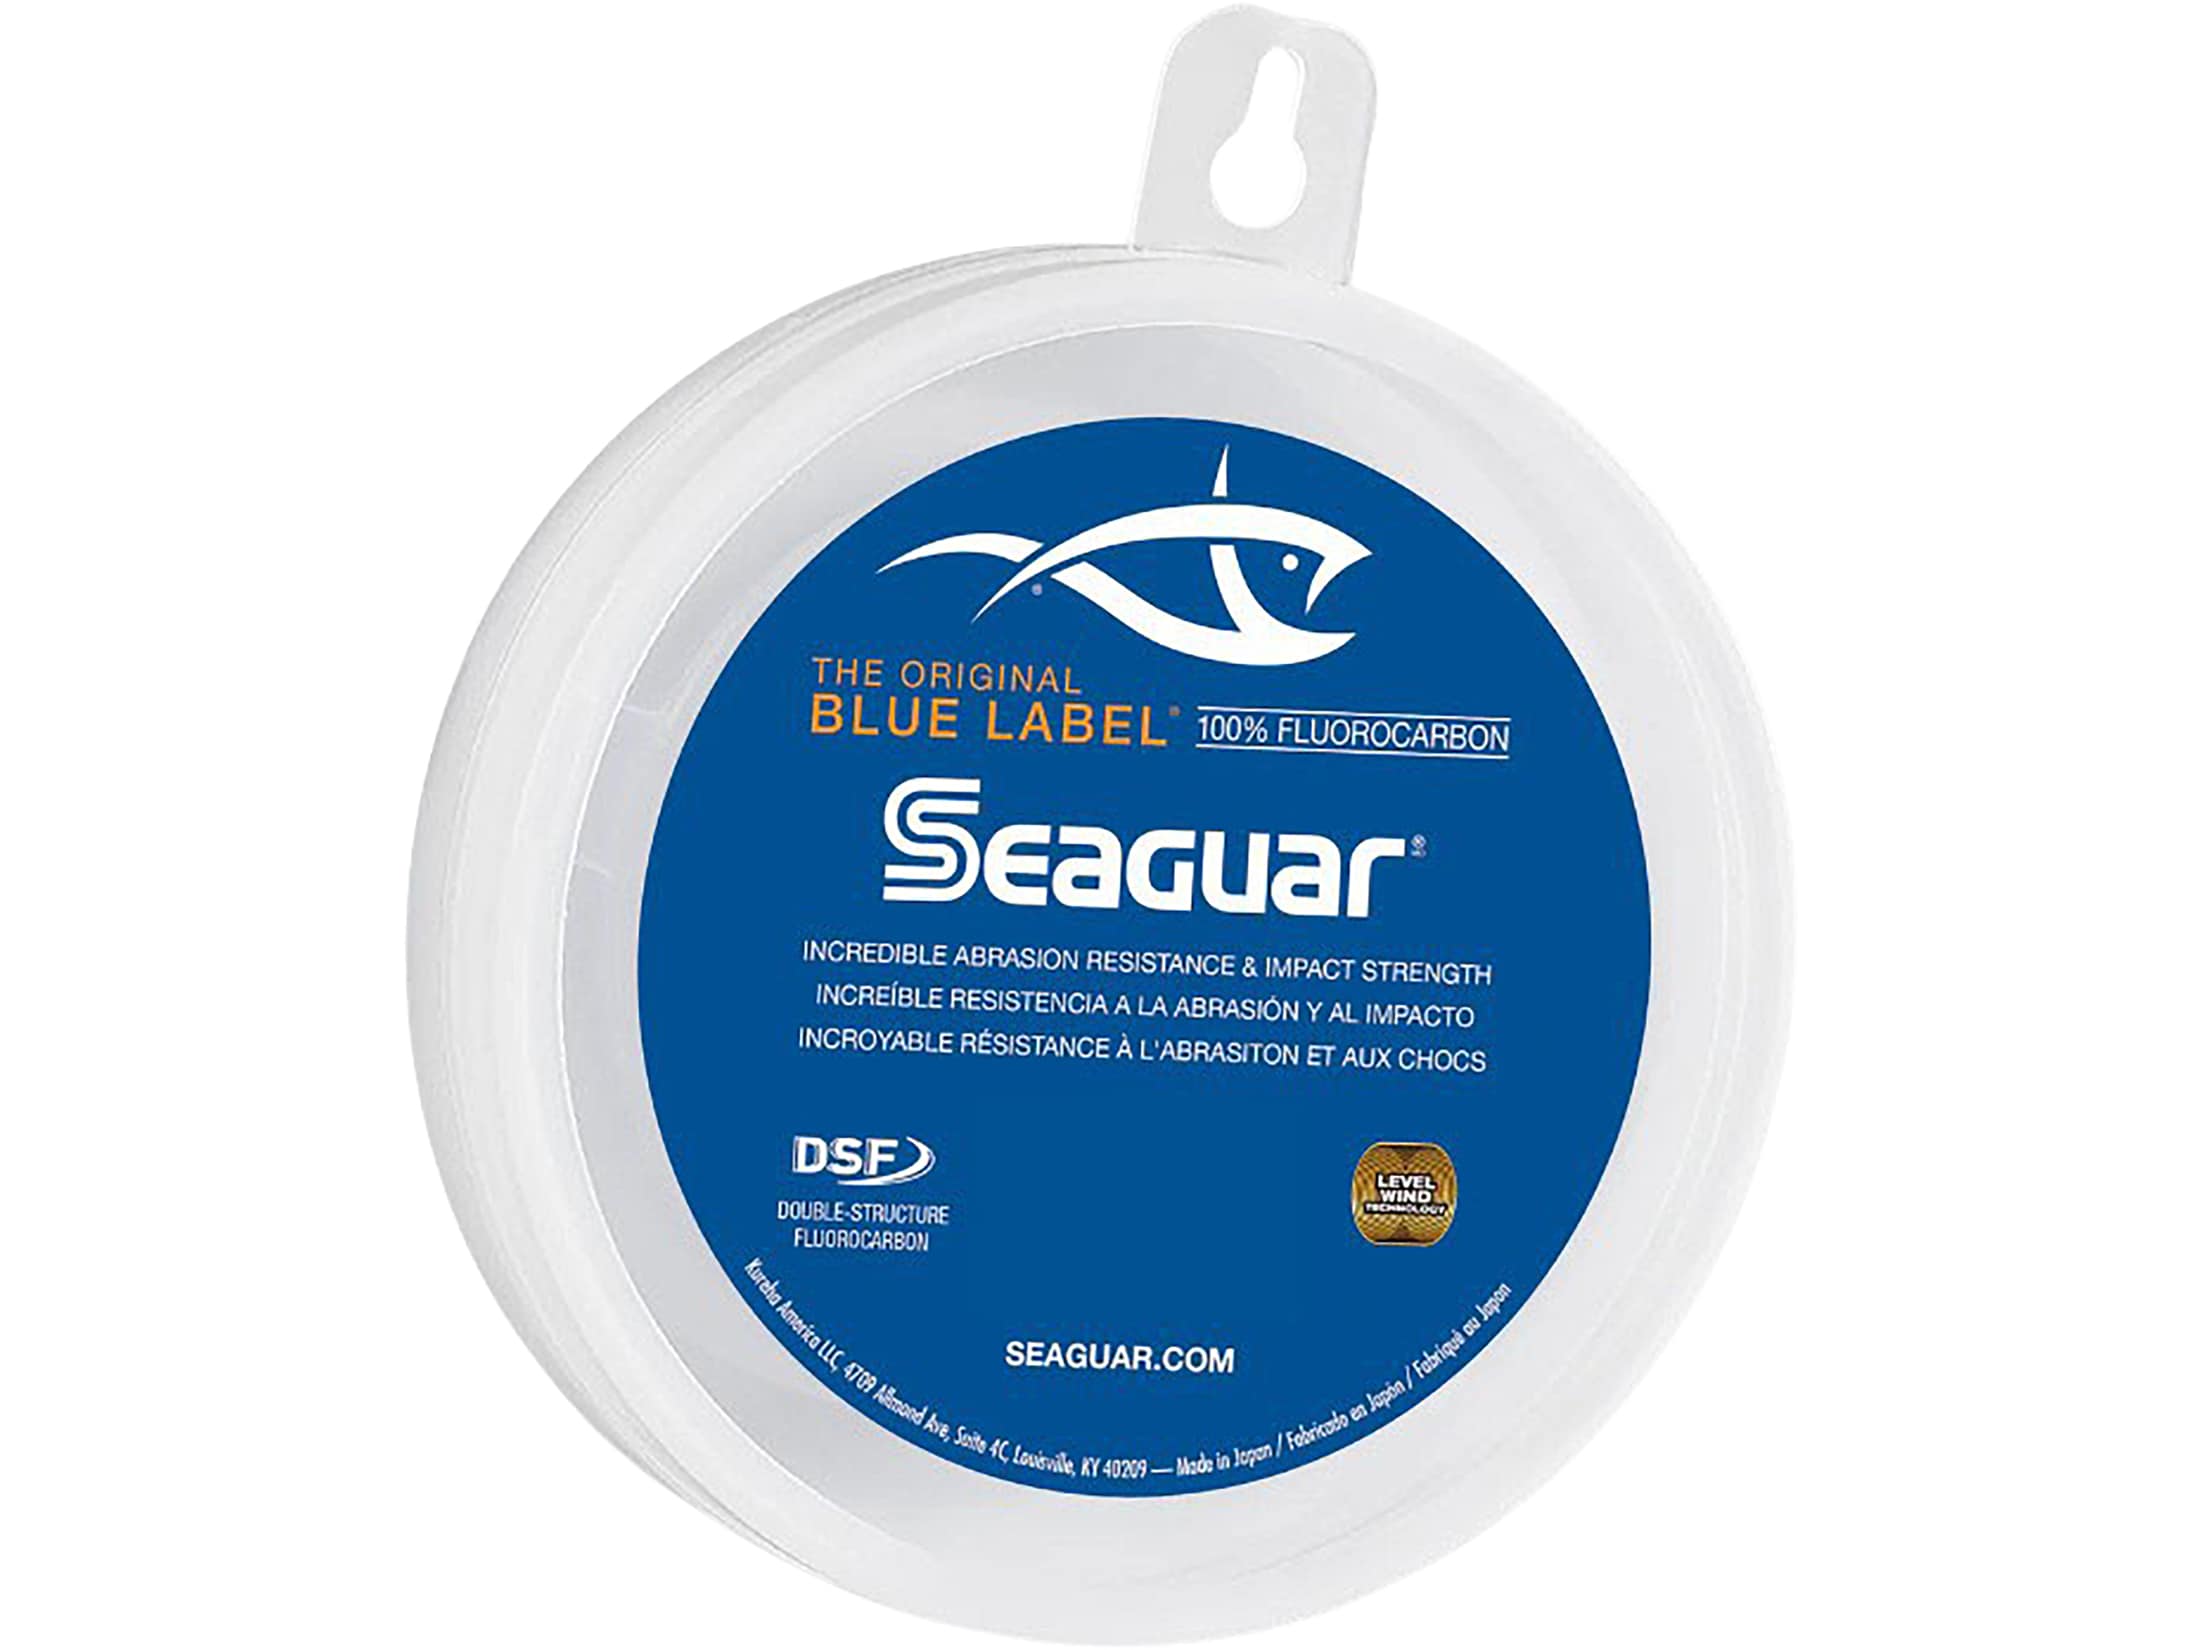 Seaguar Blue Label Fluorocarbon Fishing Leader 10lb 50yd Clear